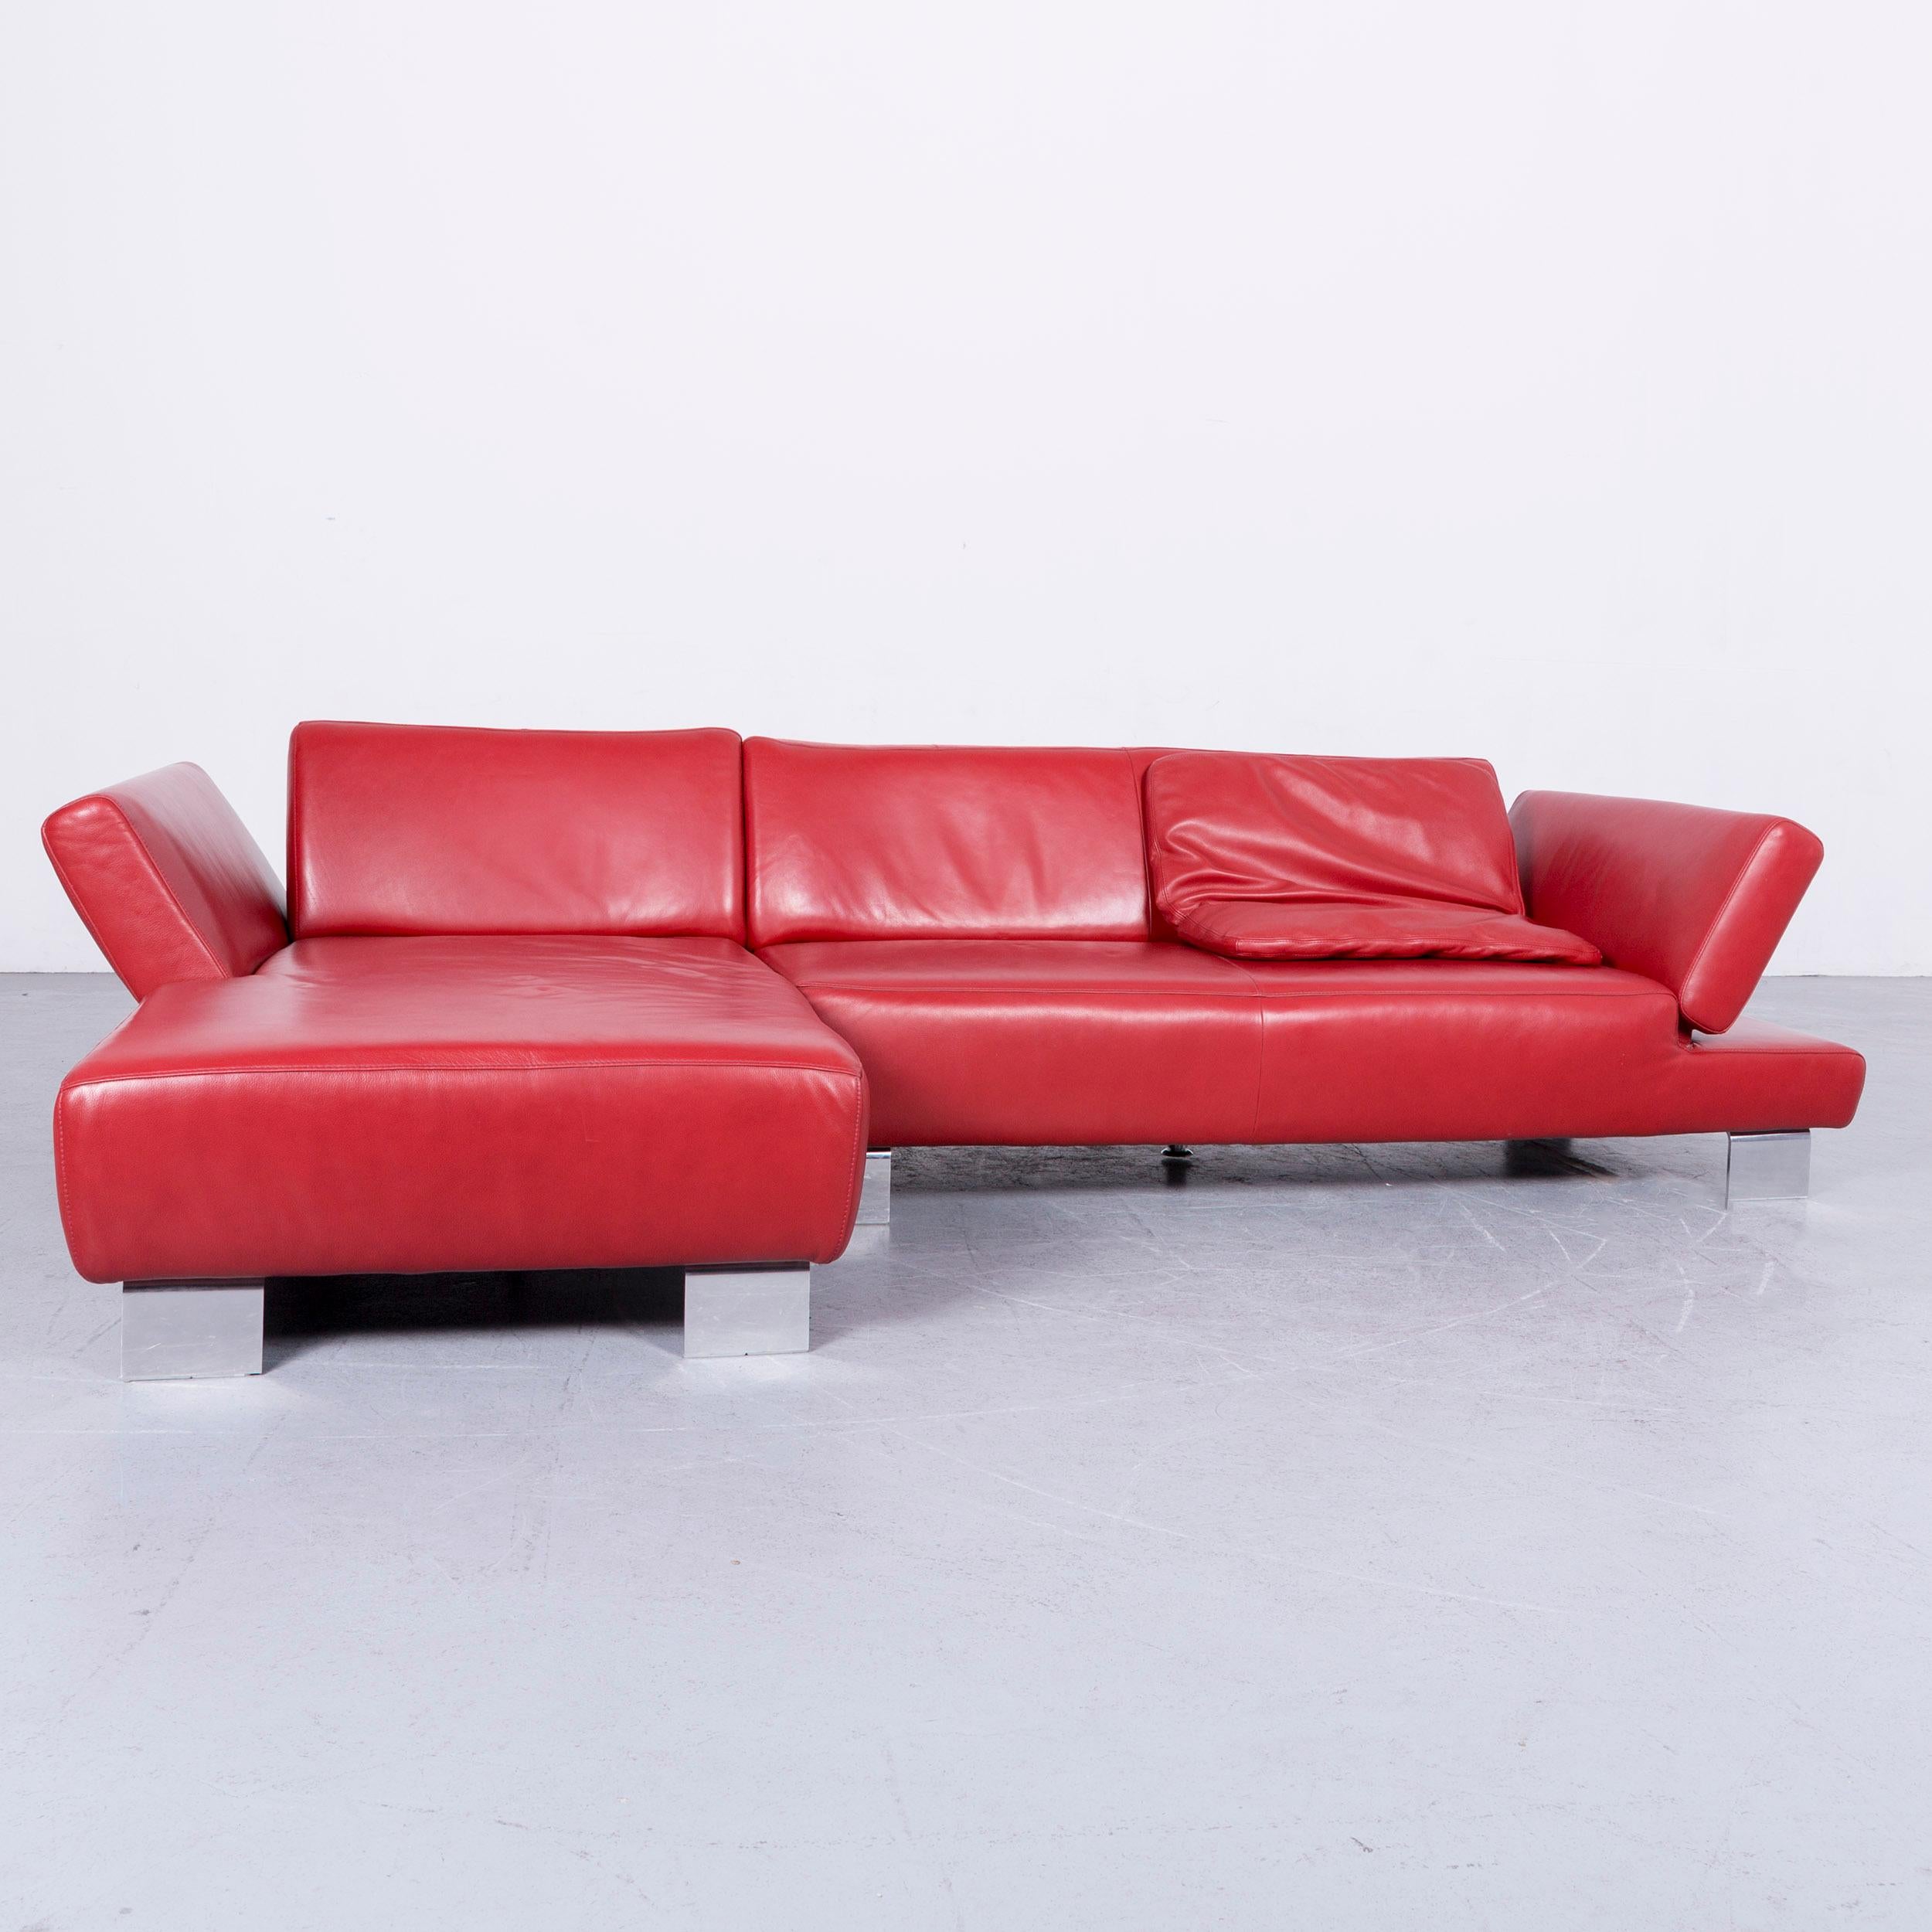 Willi Schillig Taboo Designer Leather Sofa Red Corner-Sofa Couch In Good Condition For Sale In Cologne, DE